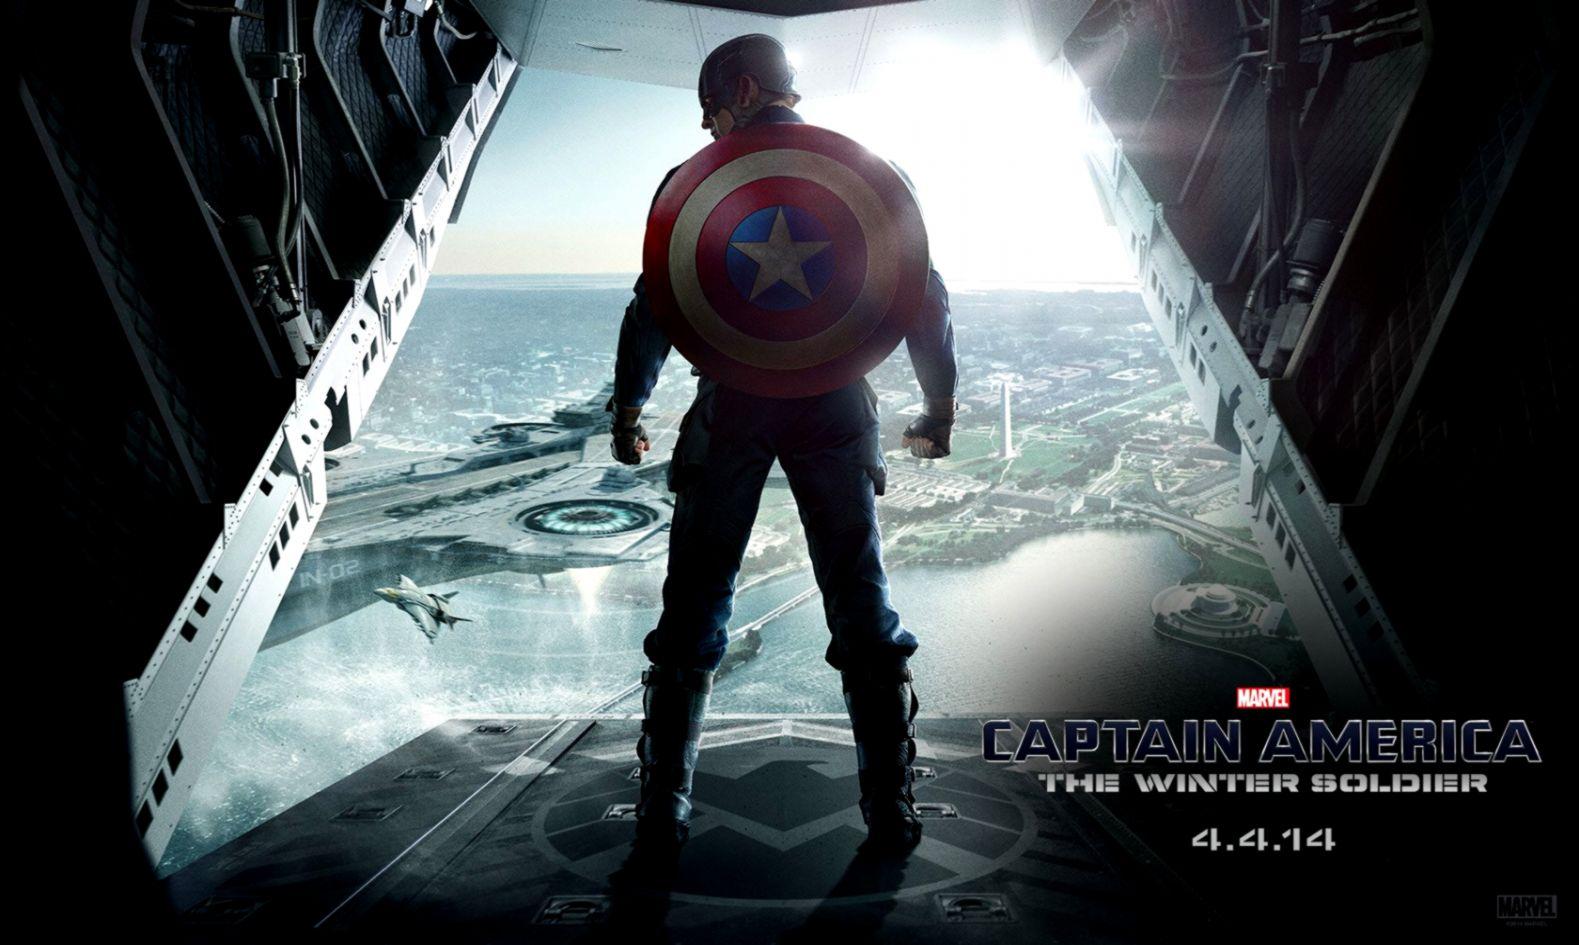 Captain America The Winter Soldier Desktop Wallpaper. This